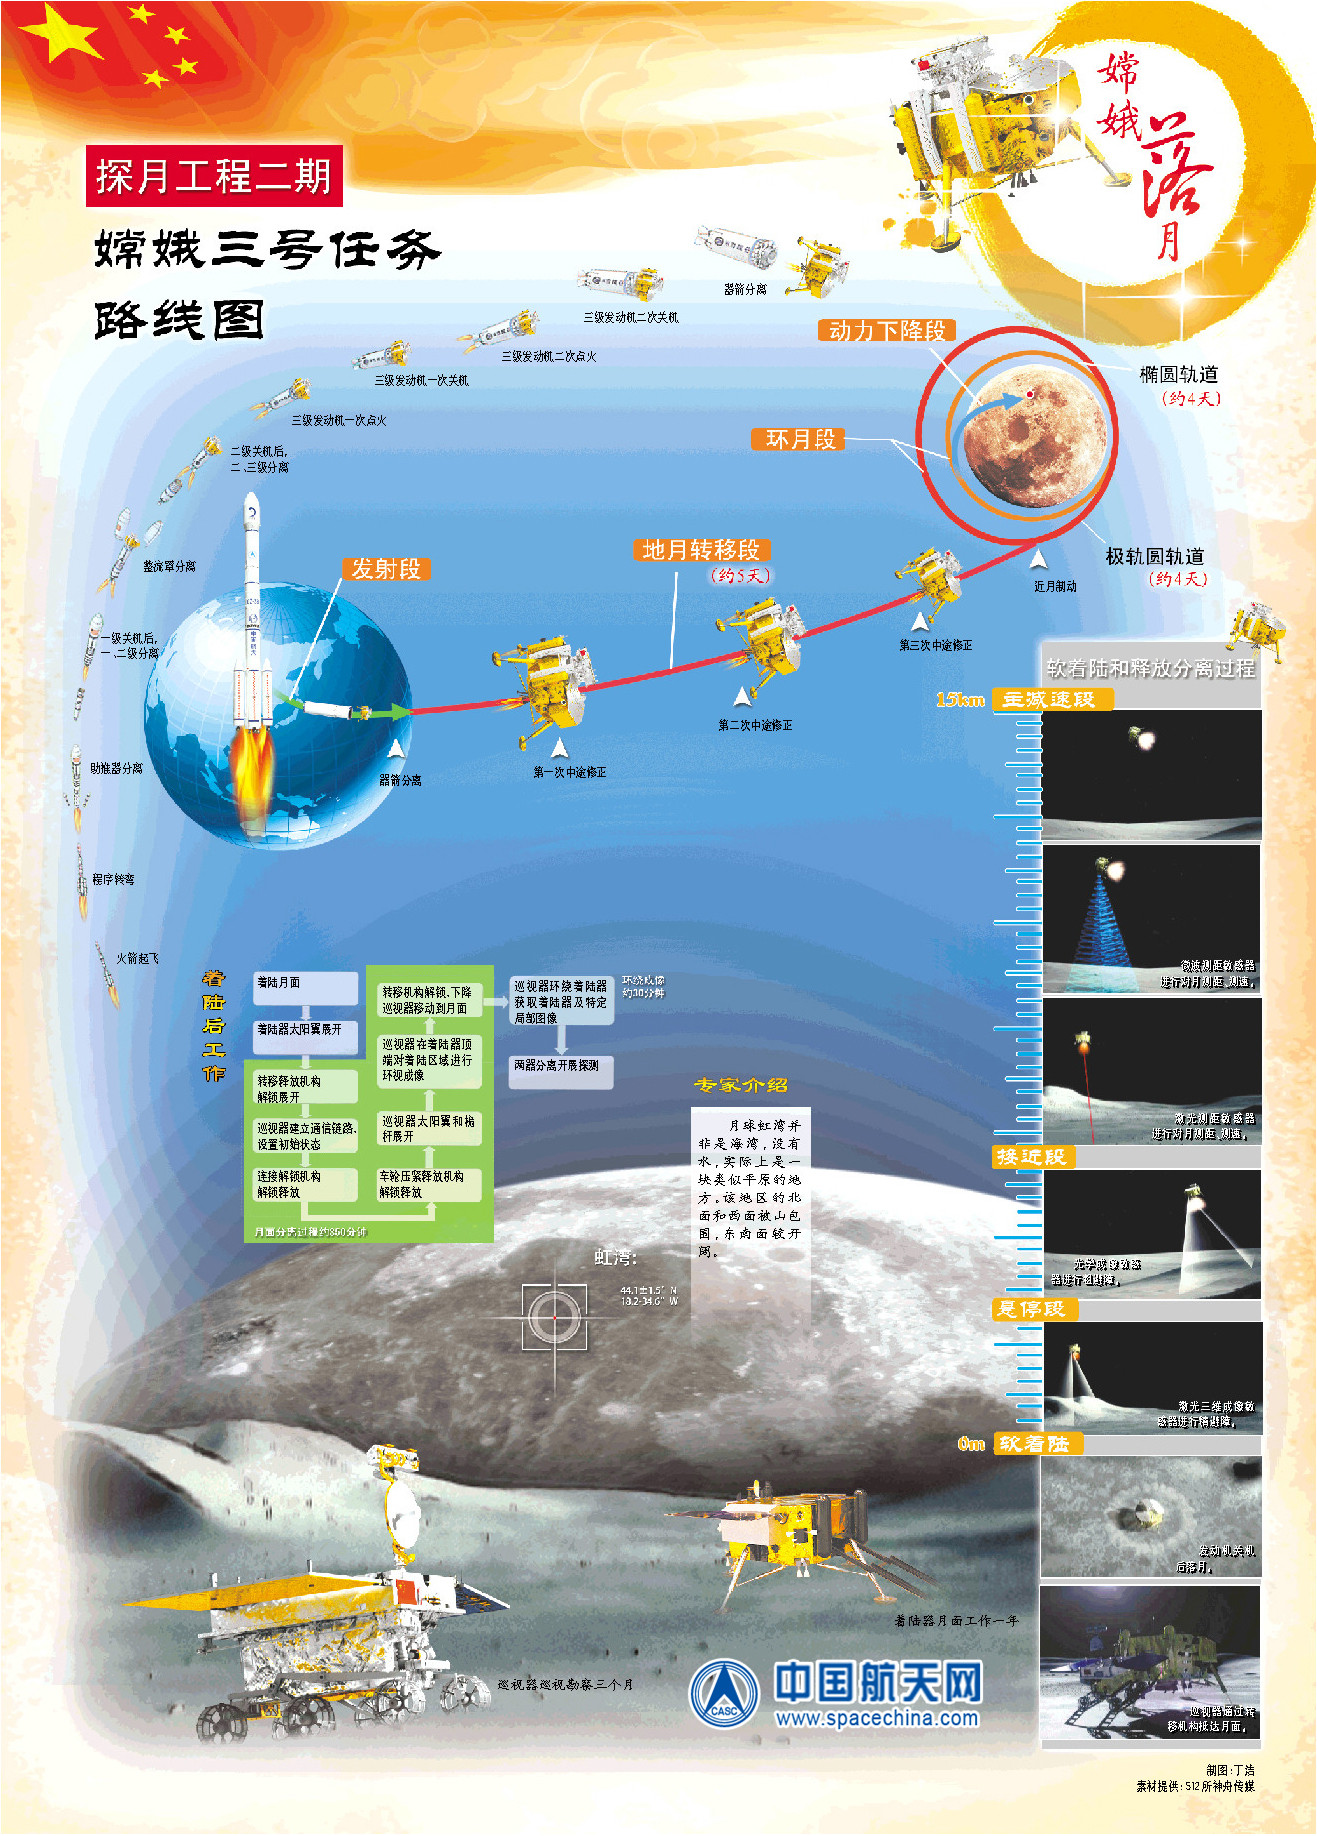 china-chang-e-3-lunar-orbit-path.jpg